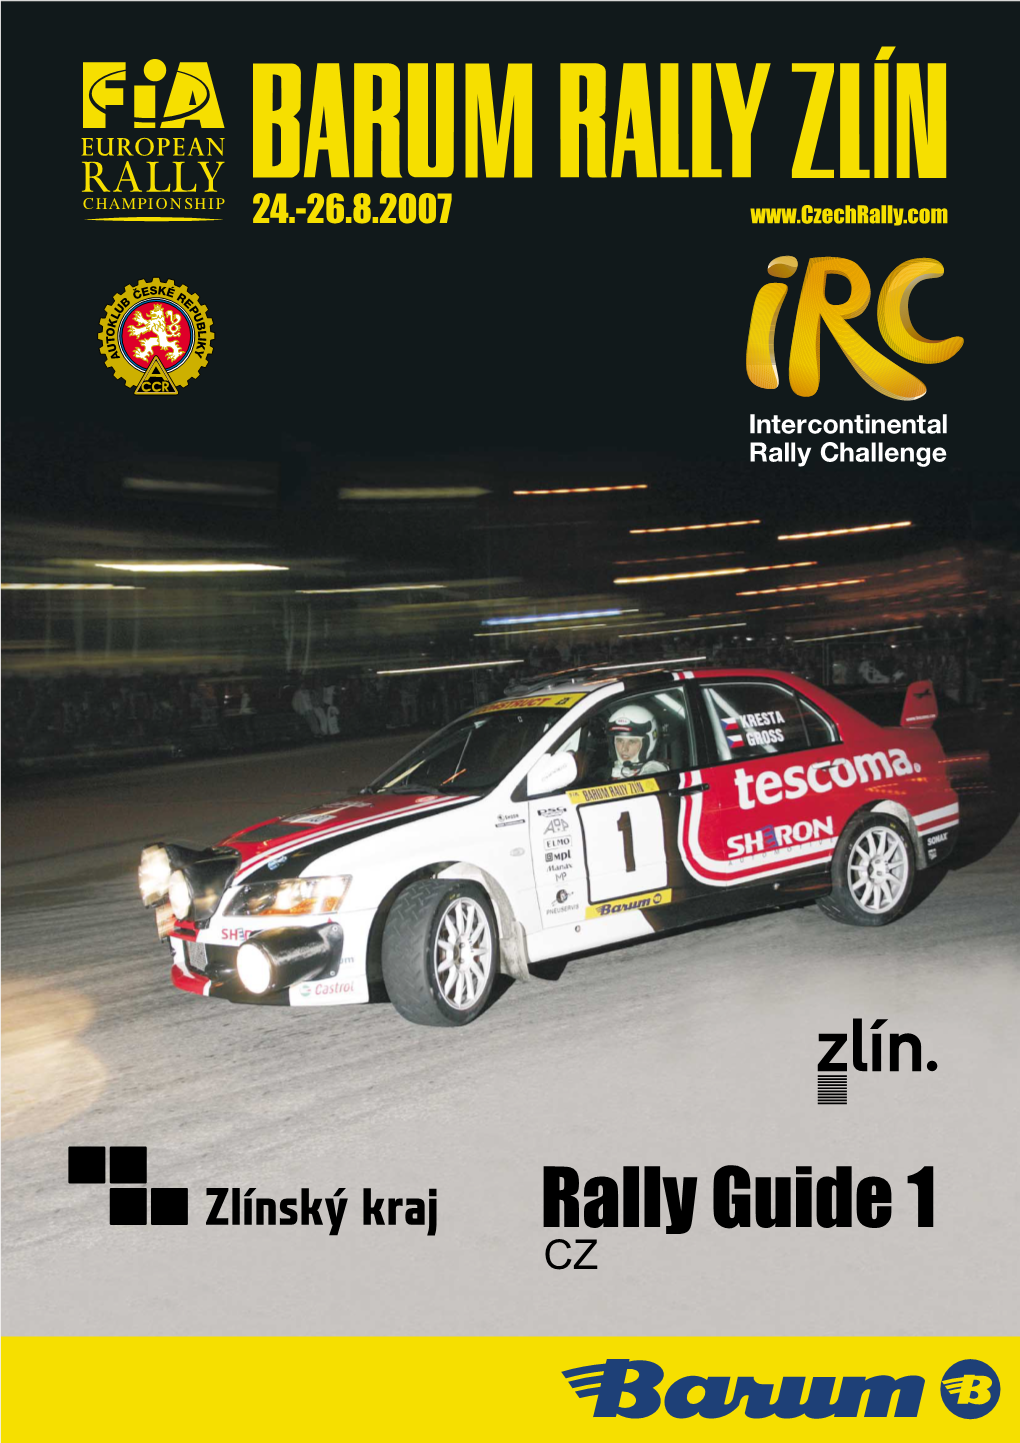 Rally Guide 1 CZ